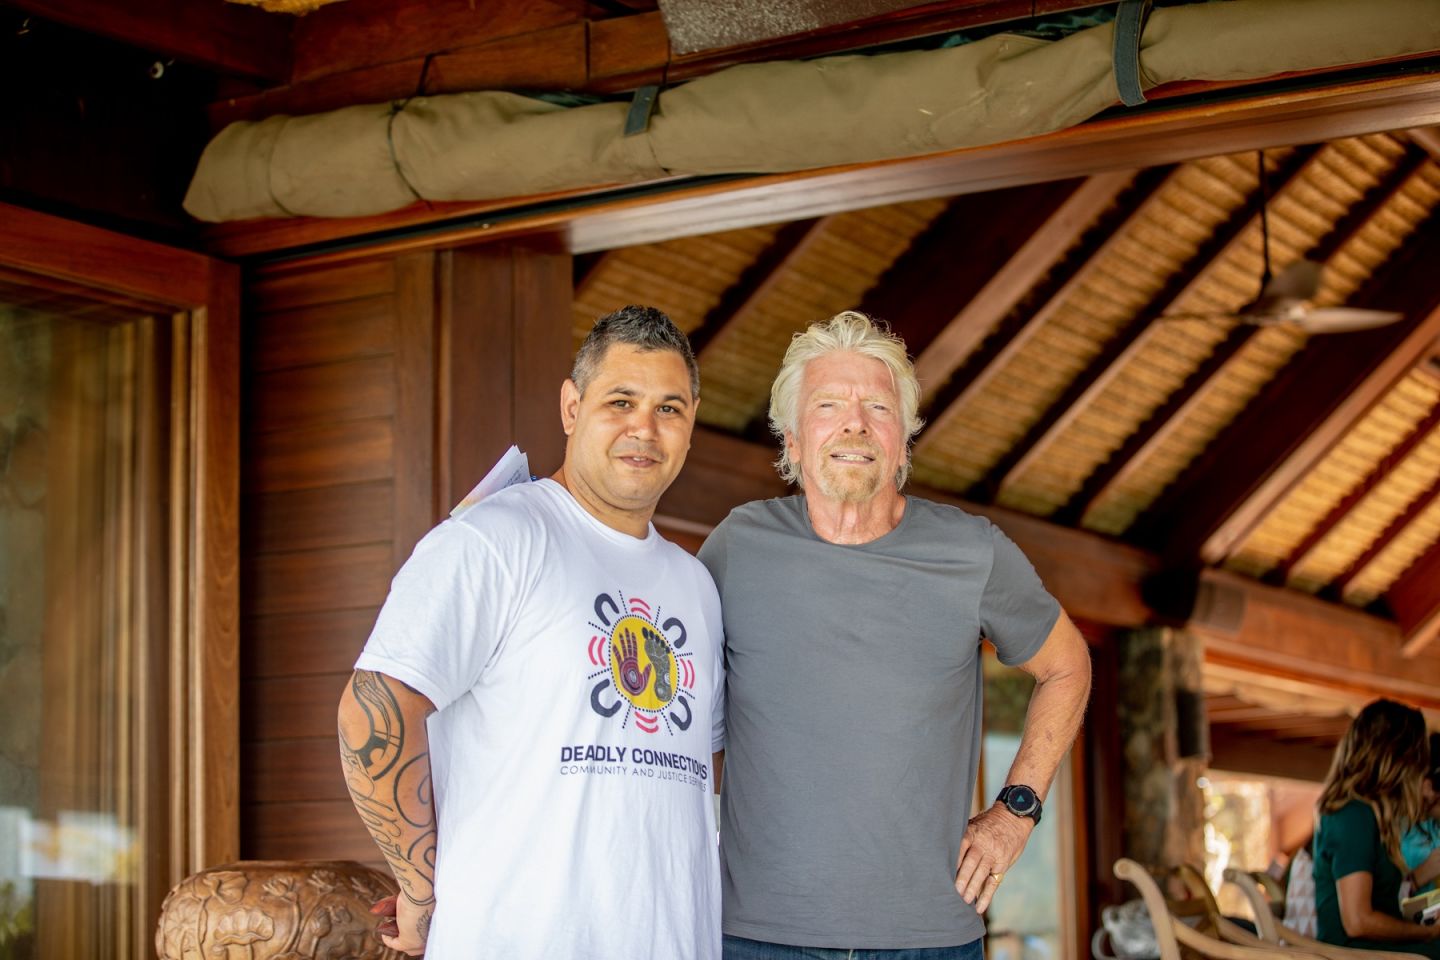  Richard Branson with Keenan Mundine at a Virgin Unite Necker Gathering